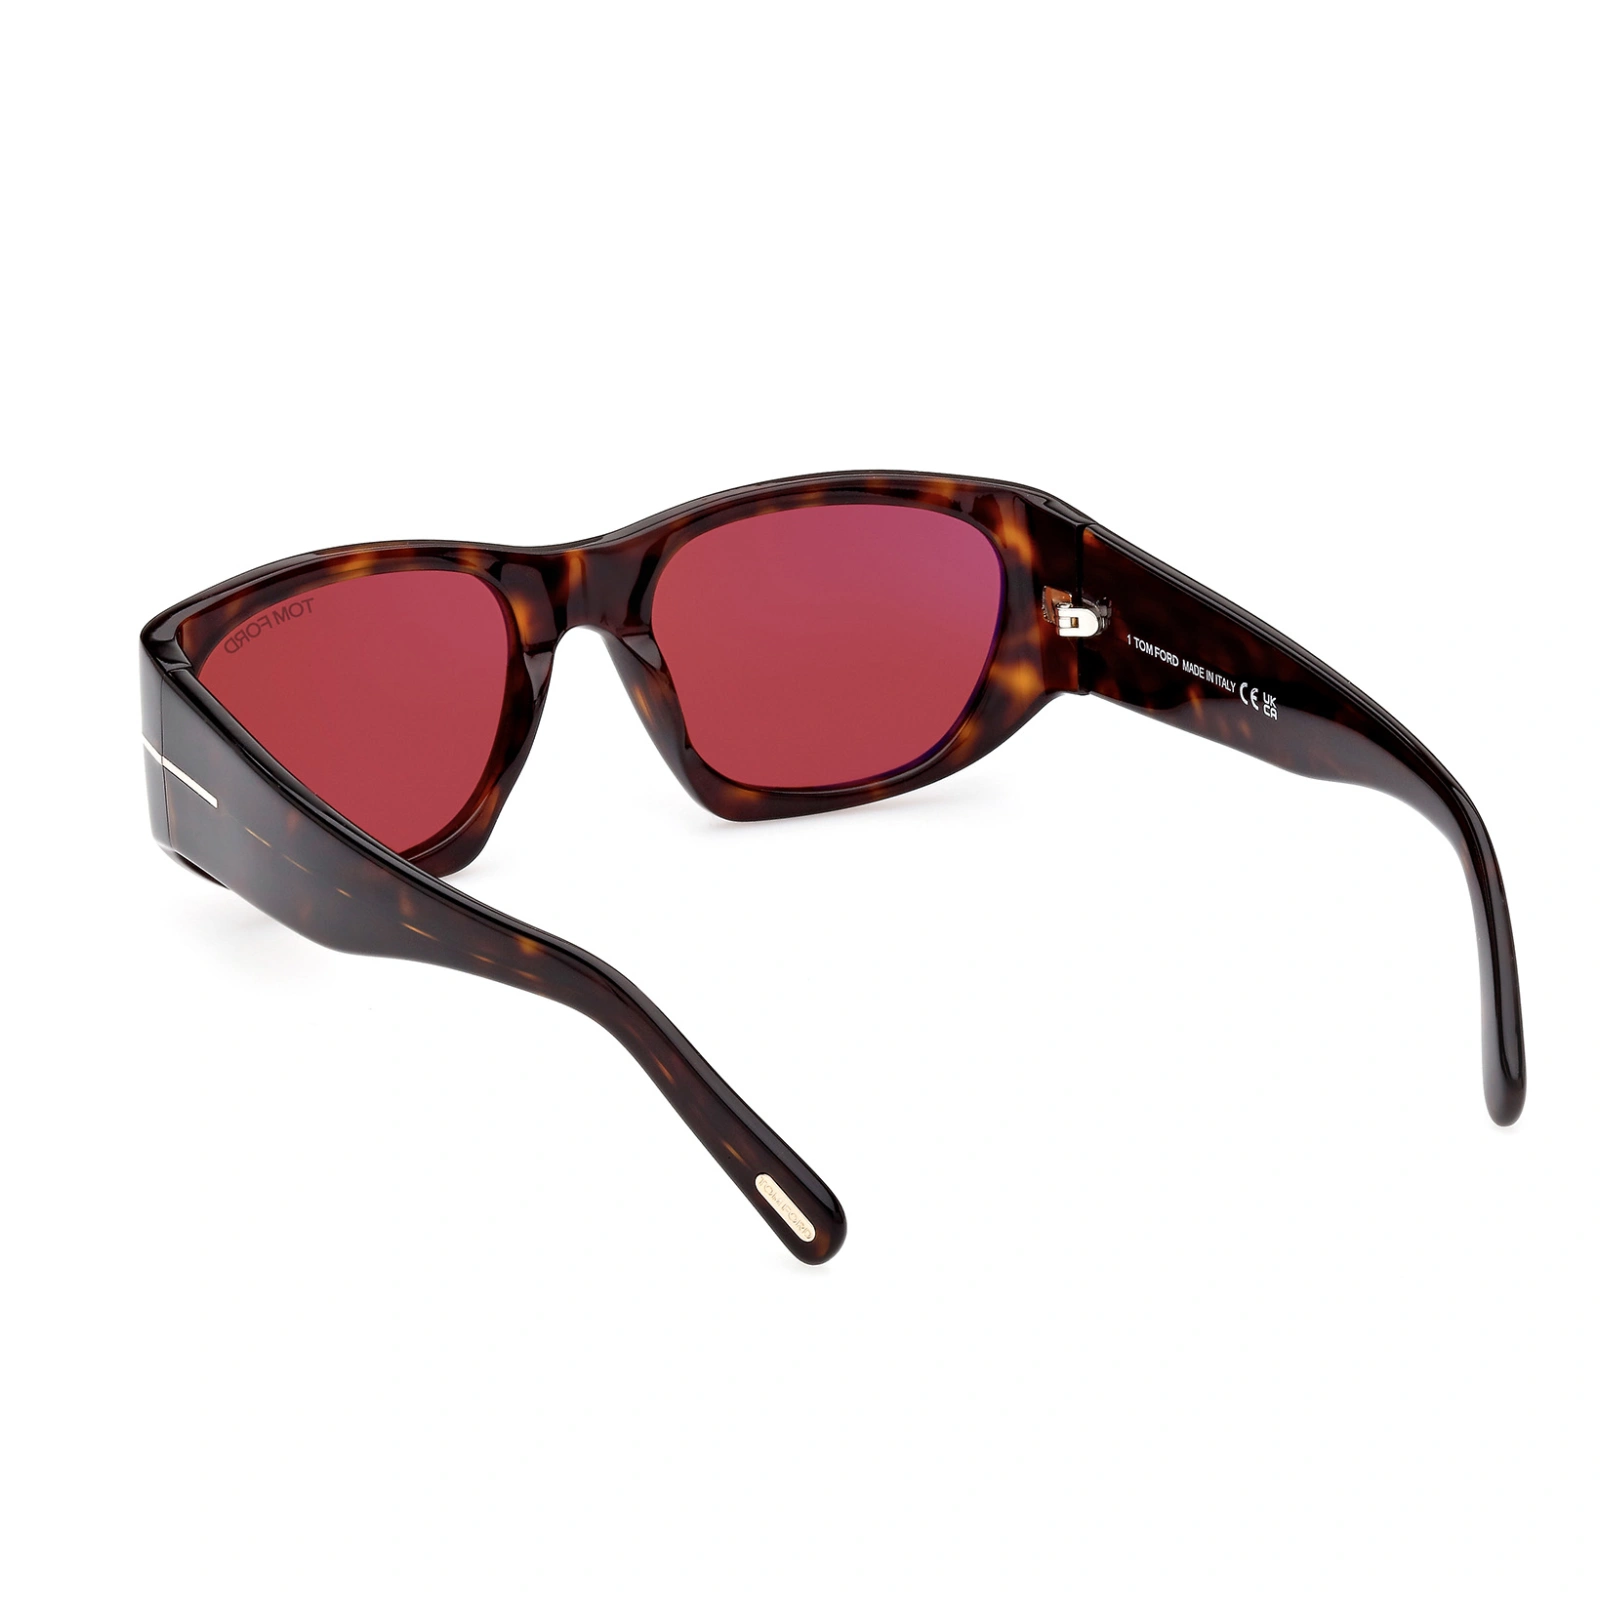 Tom Ford Sunglasses Tom Ford Sunglasses FT0987 52S 53mm Cyrille Eyeglasses Eyewear UK USA Australia 